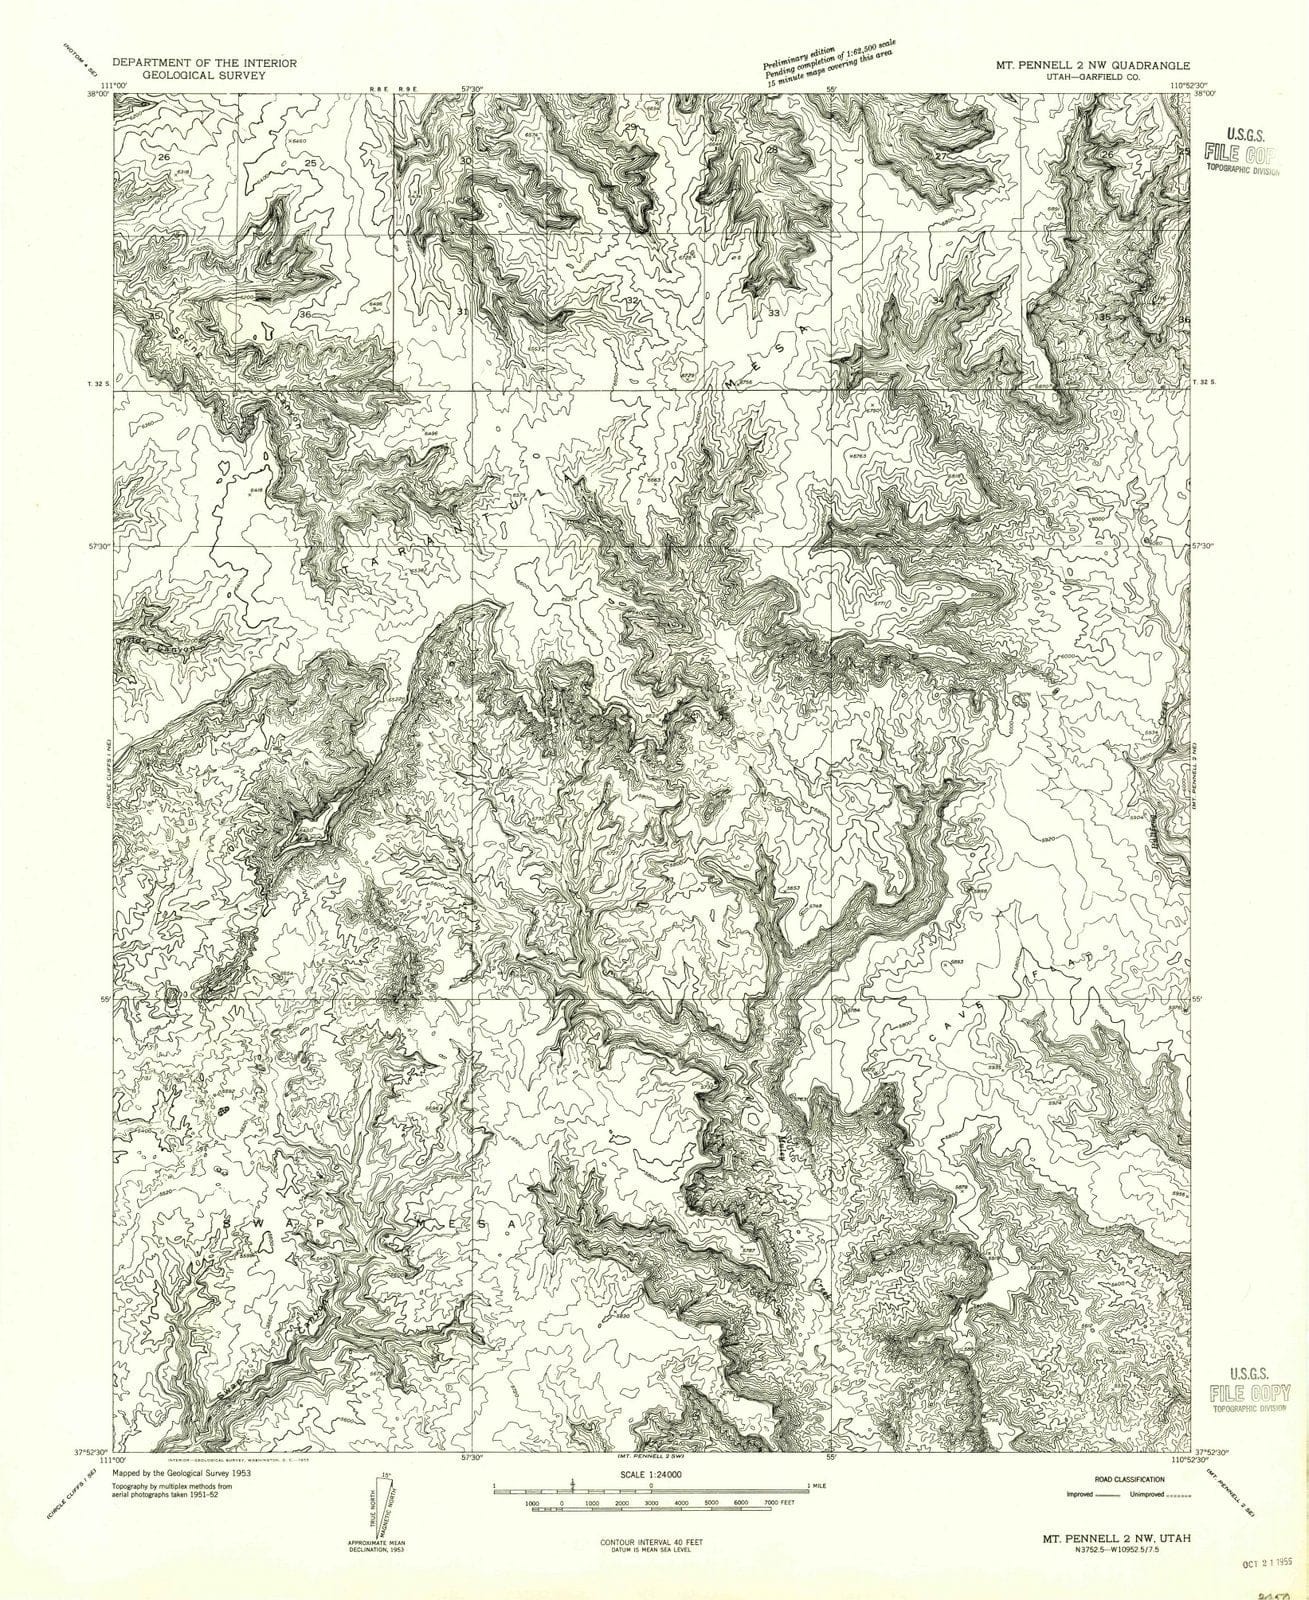 1953 Mt Pennell 2, UT - Utah - USGS Topographic Map